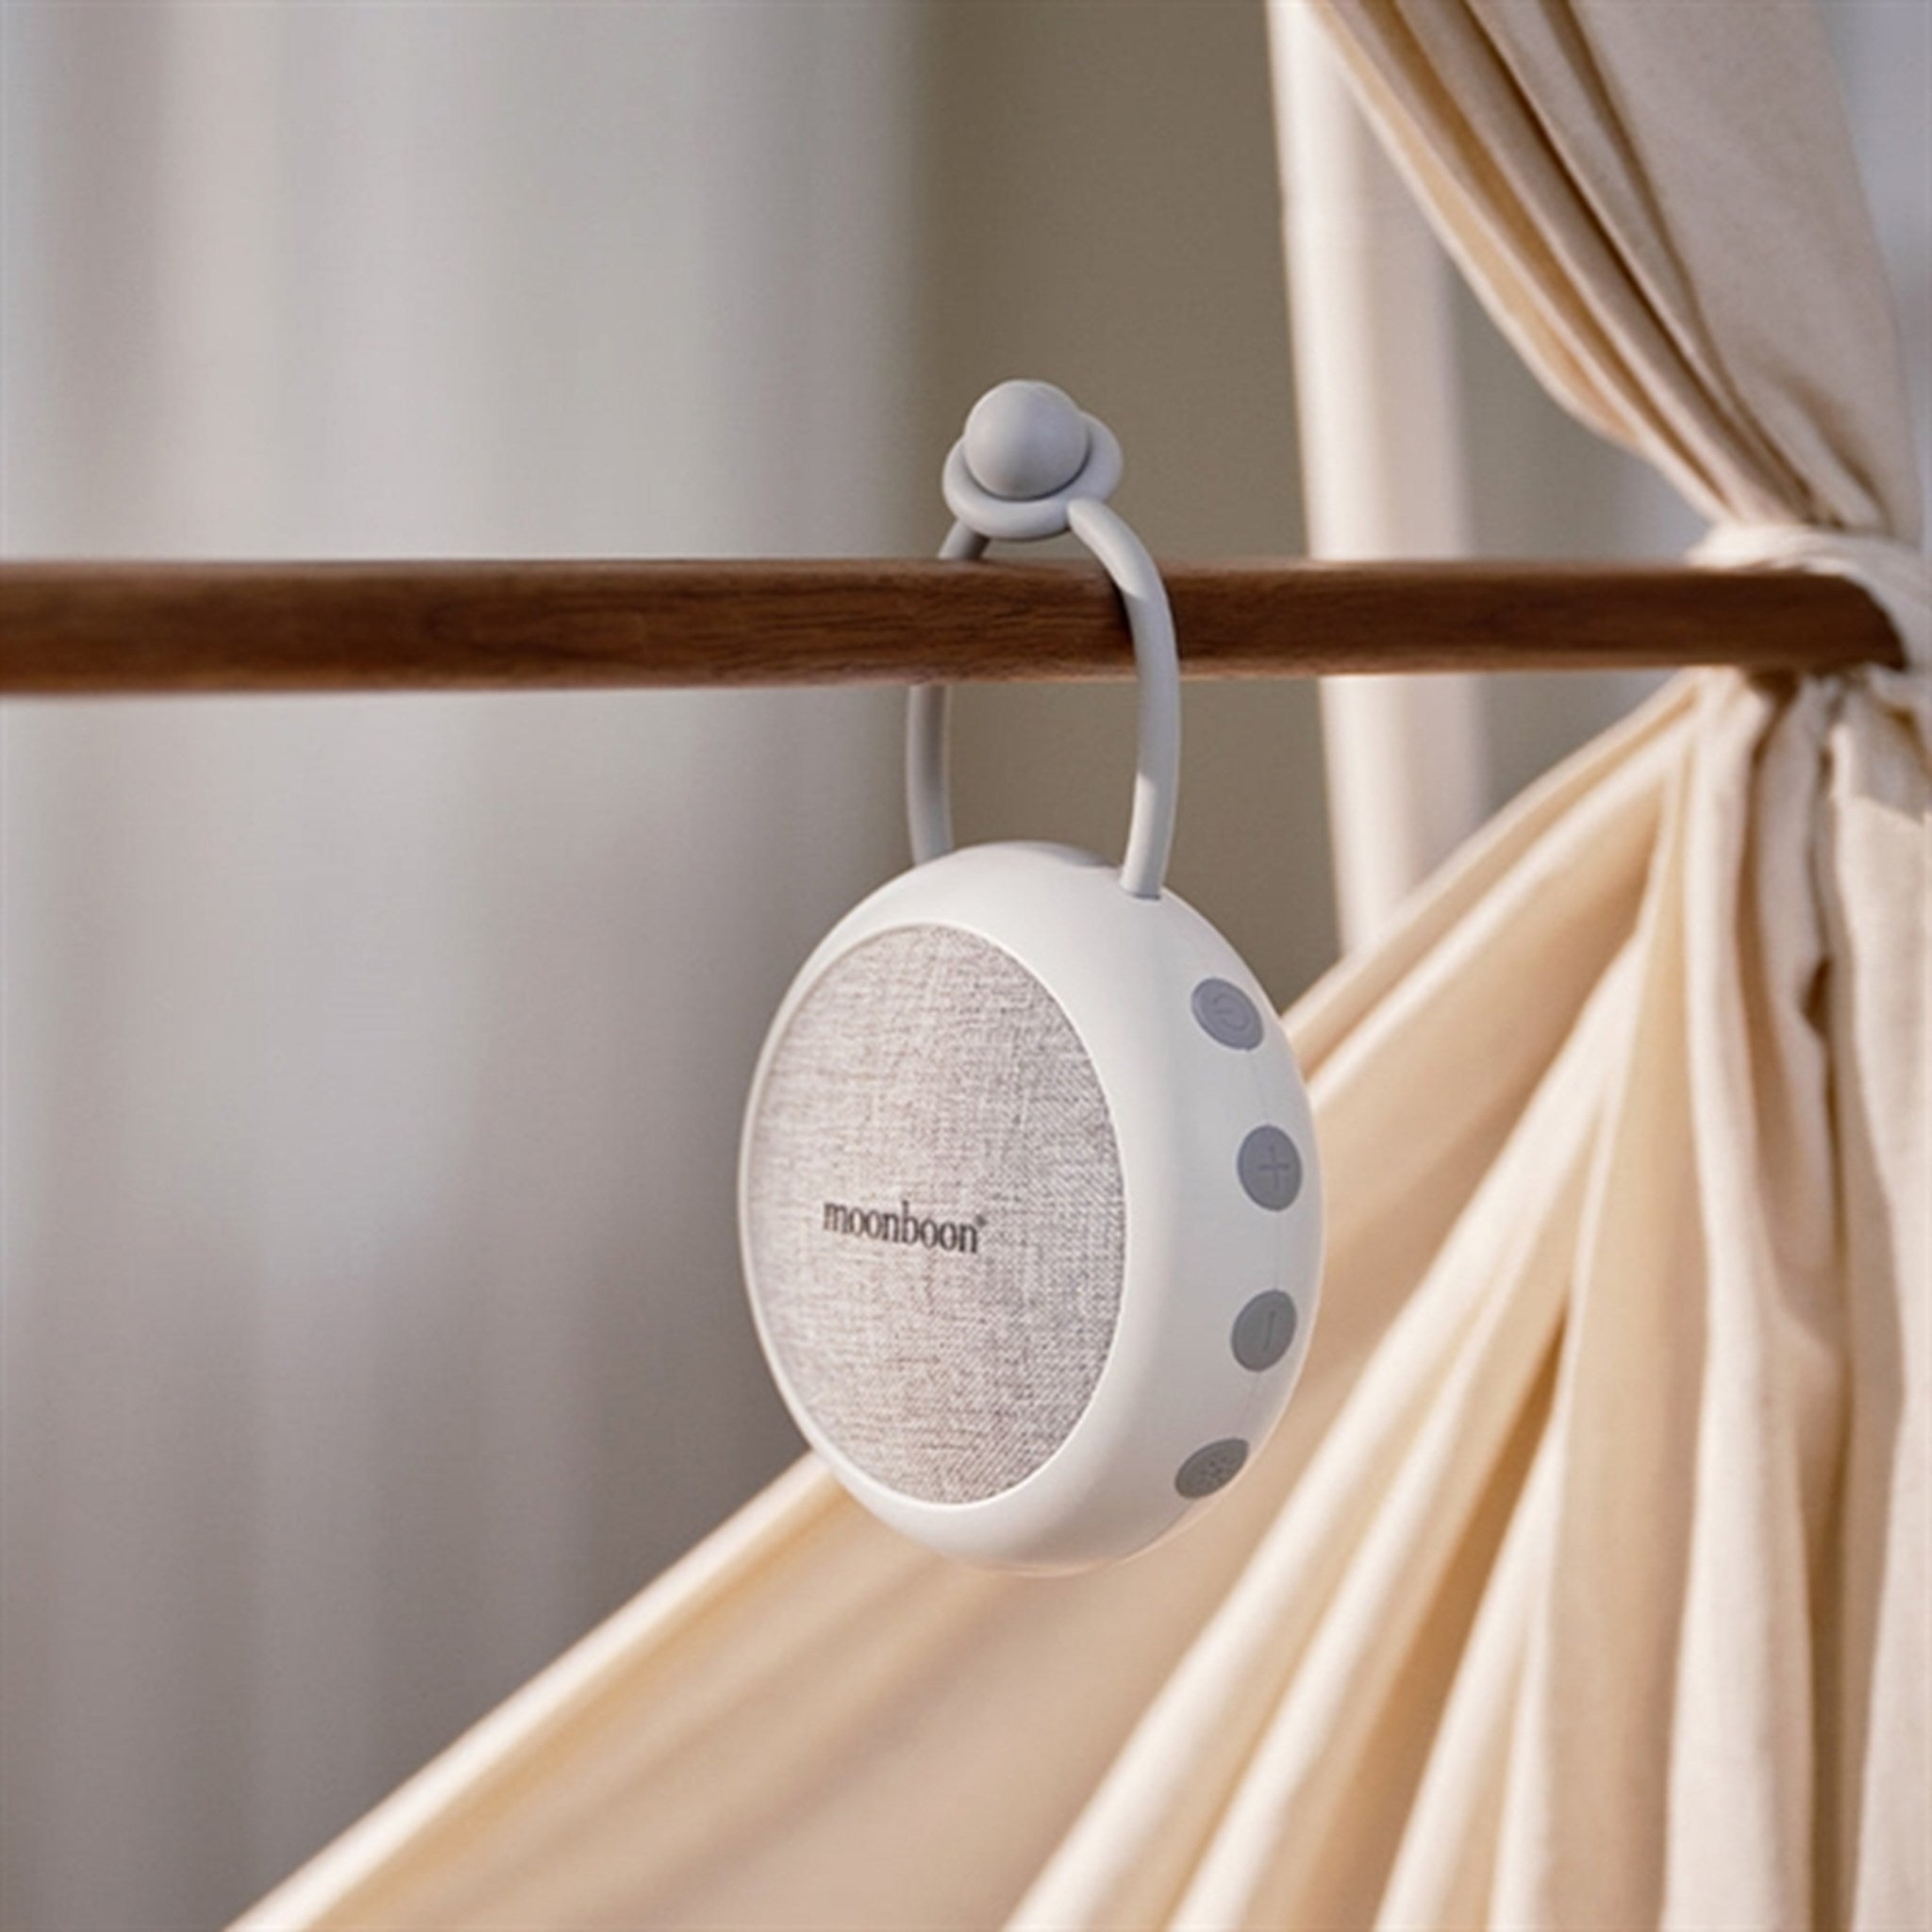 Moonboon White Noise Speaker - 用自然声音创造宁静与健康 3